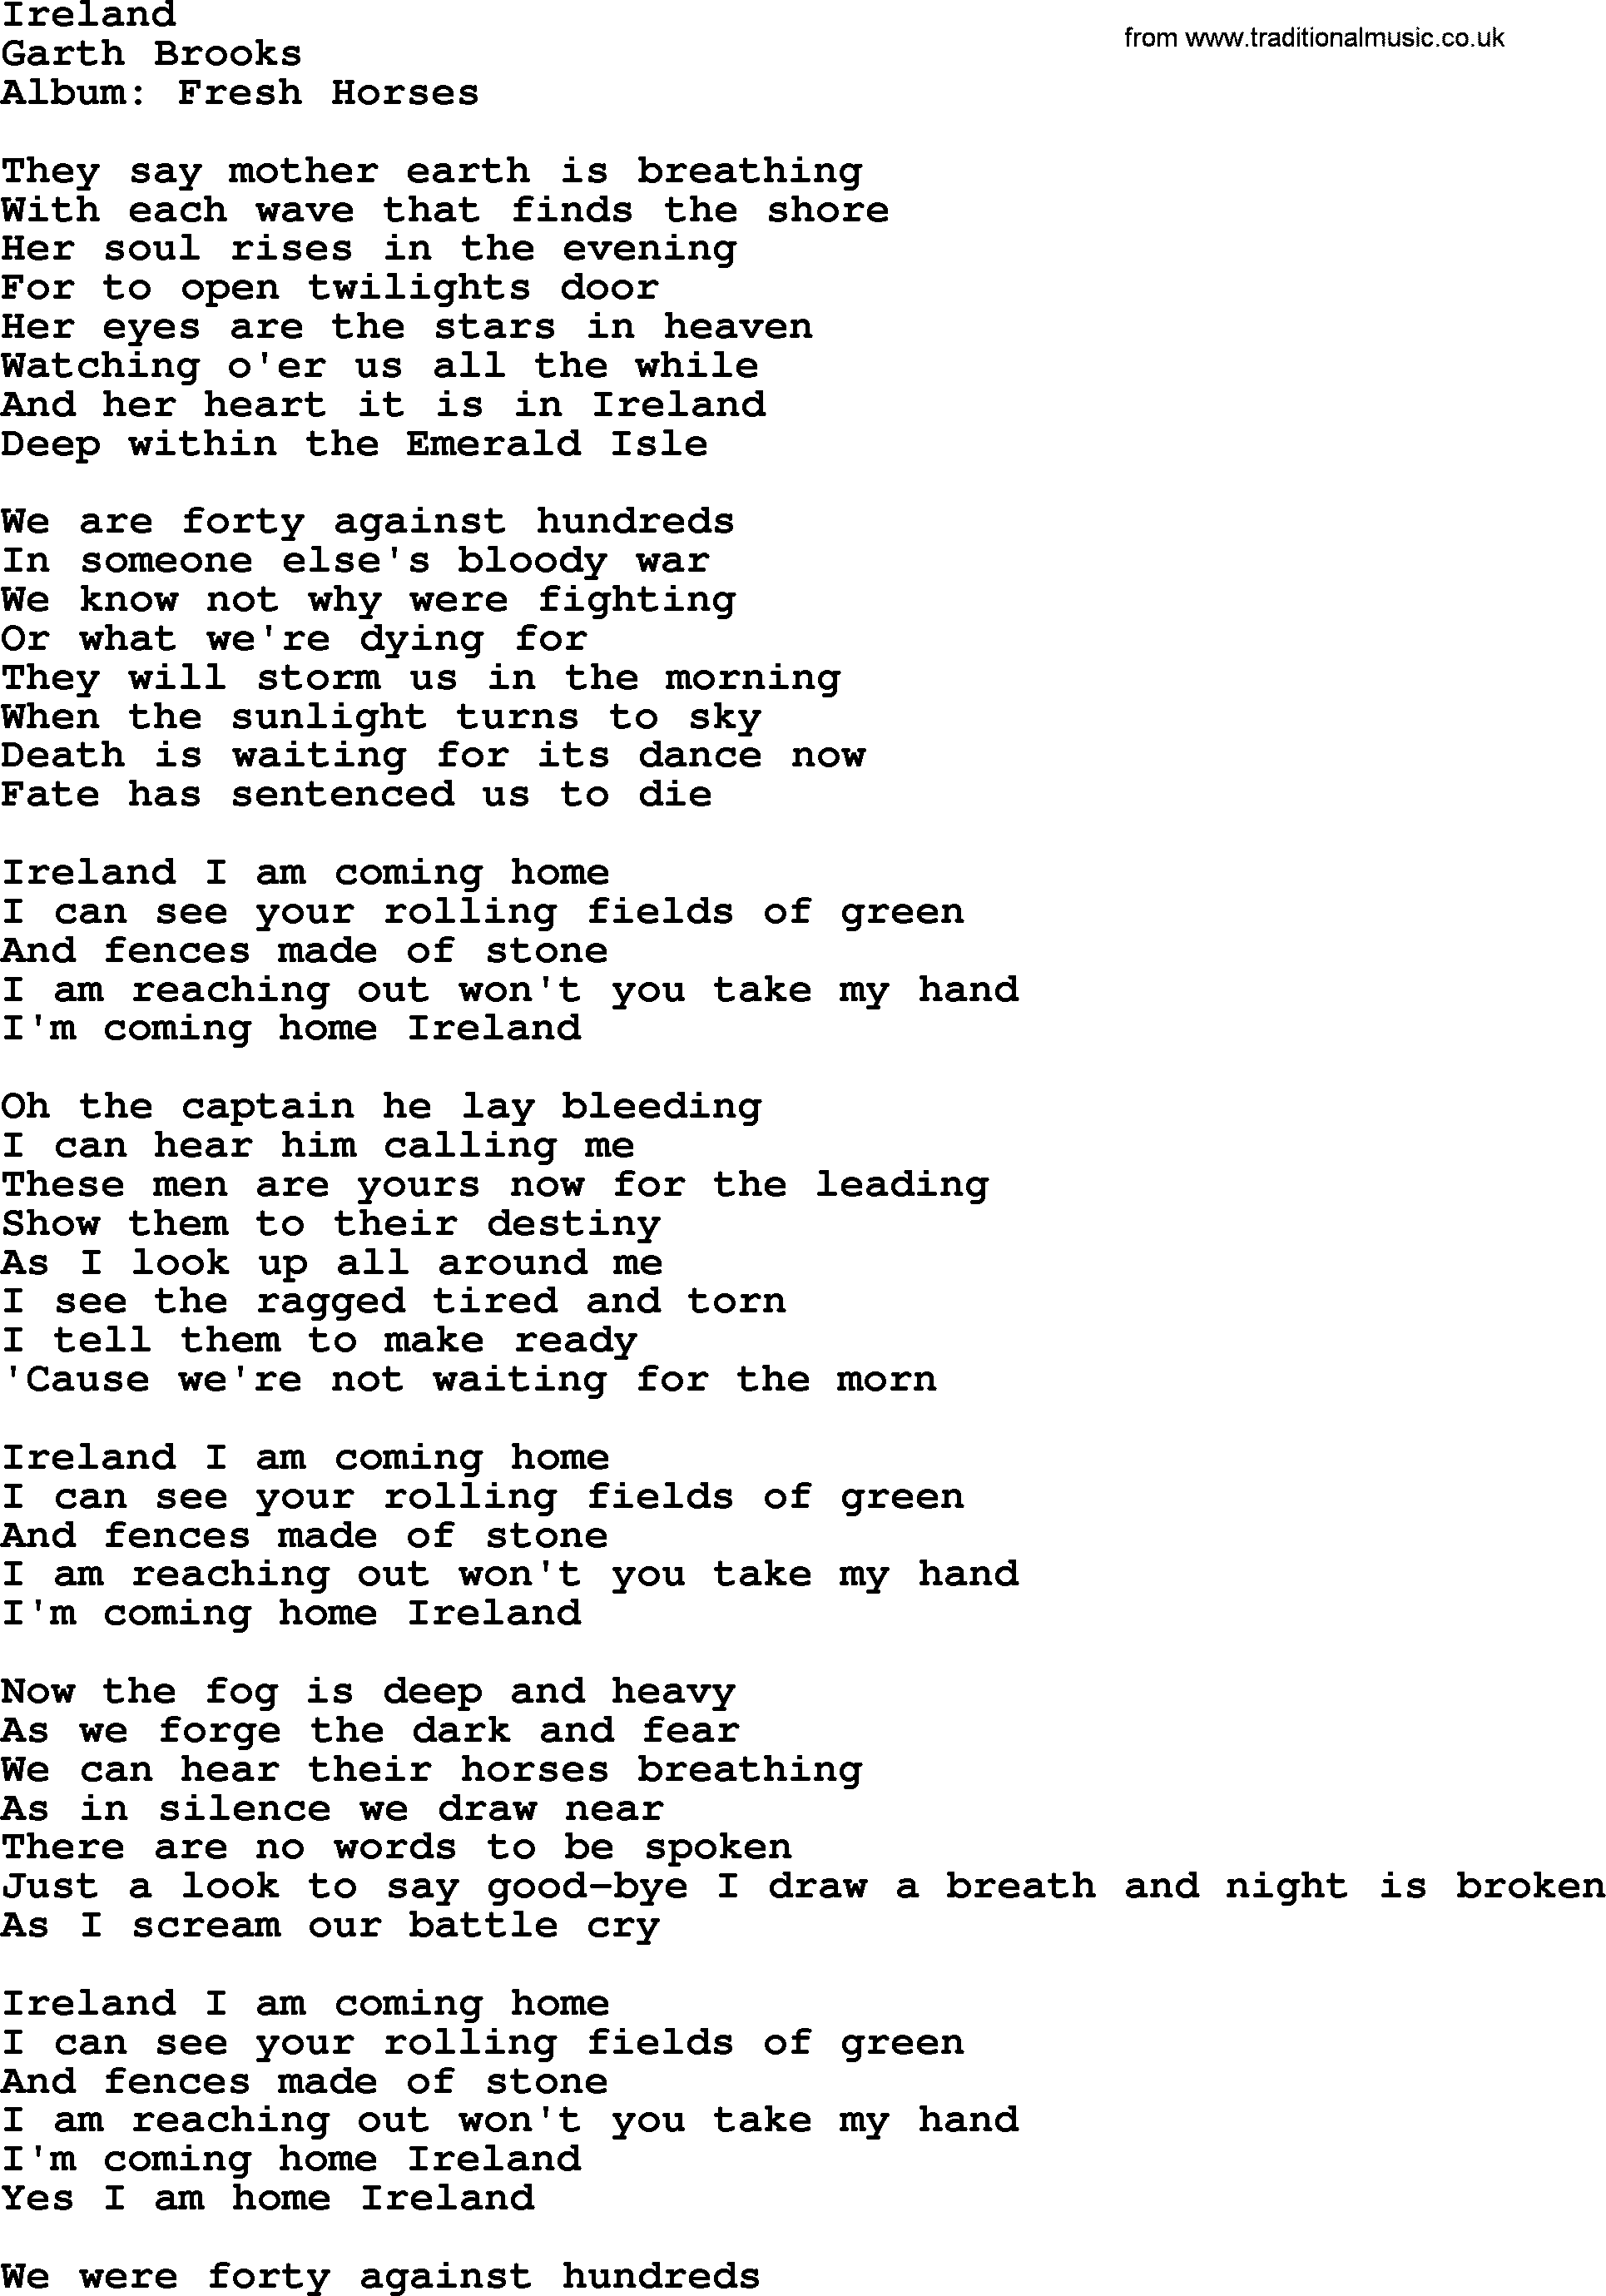 Garth Brooks song: Ireland, lyrics